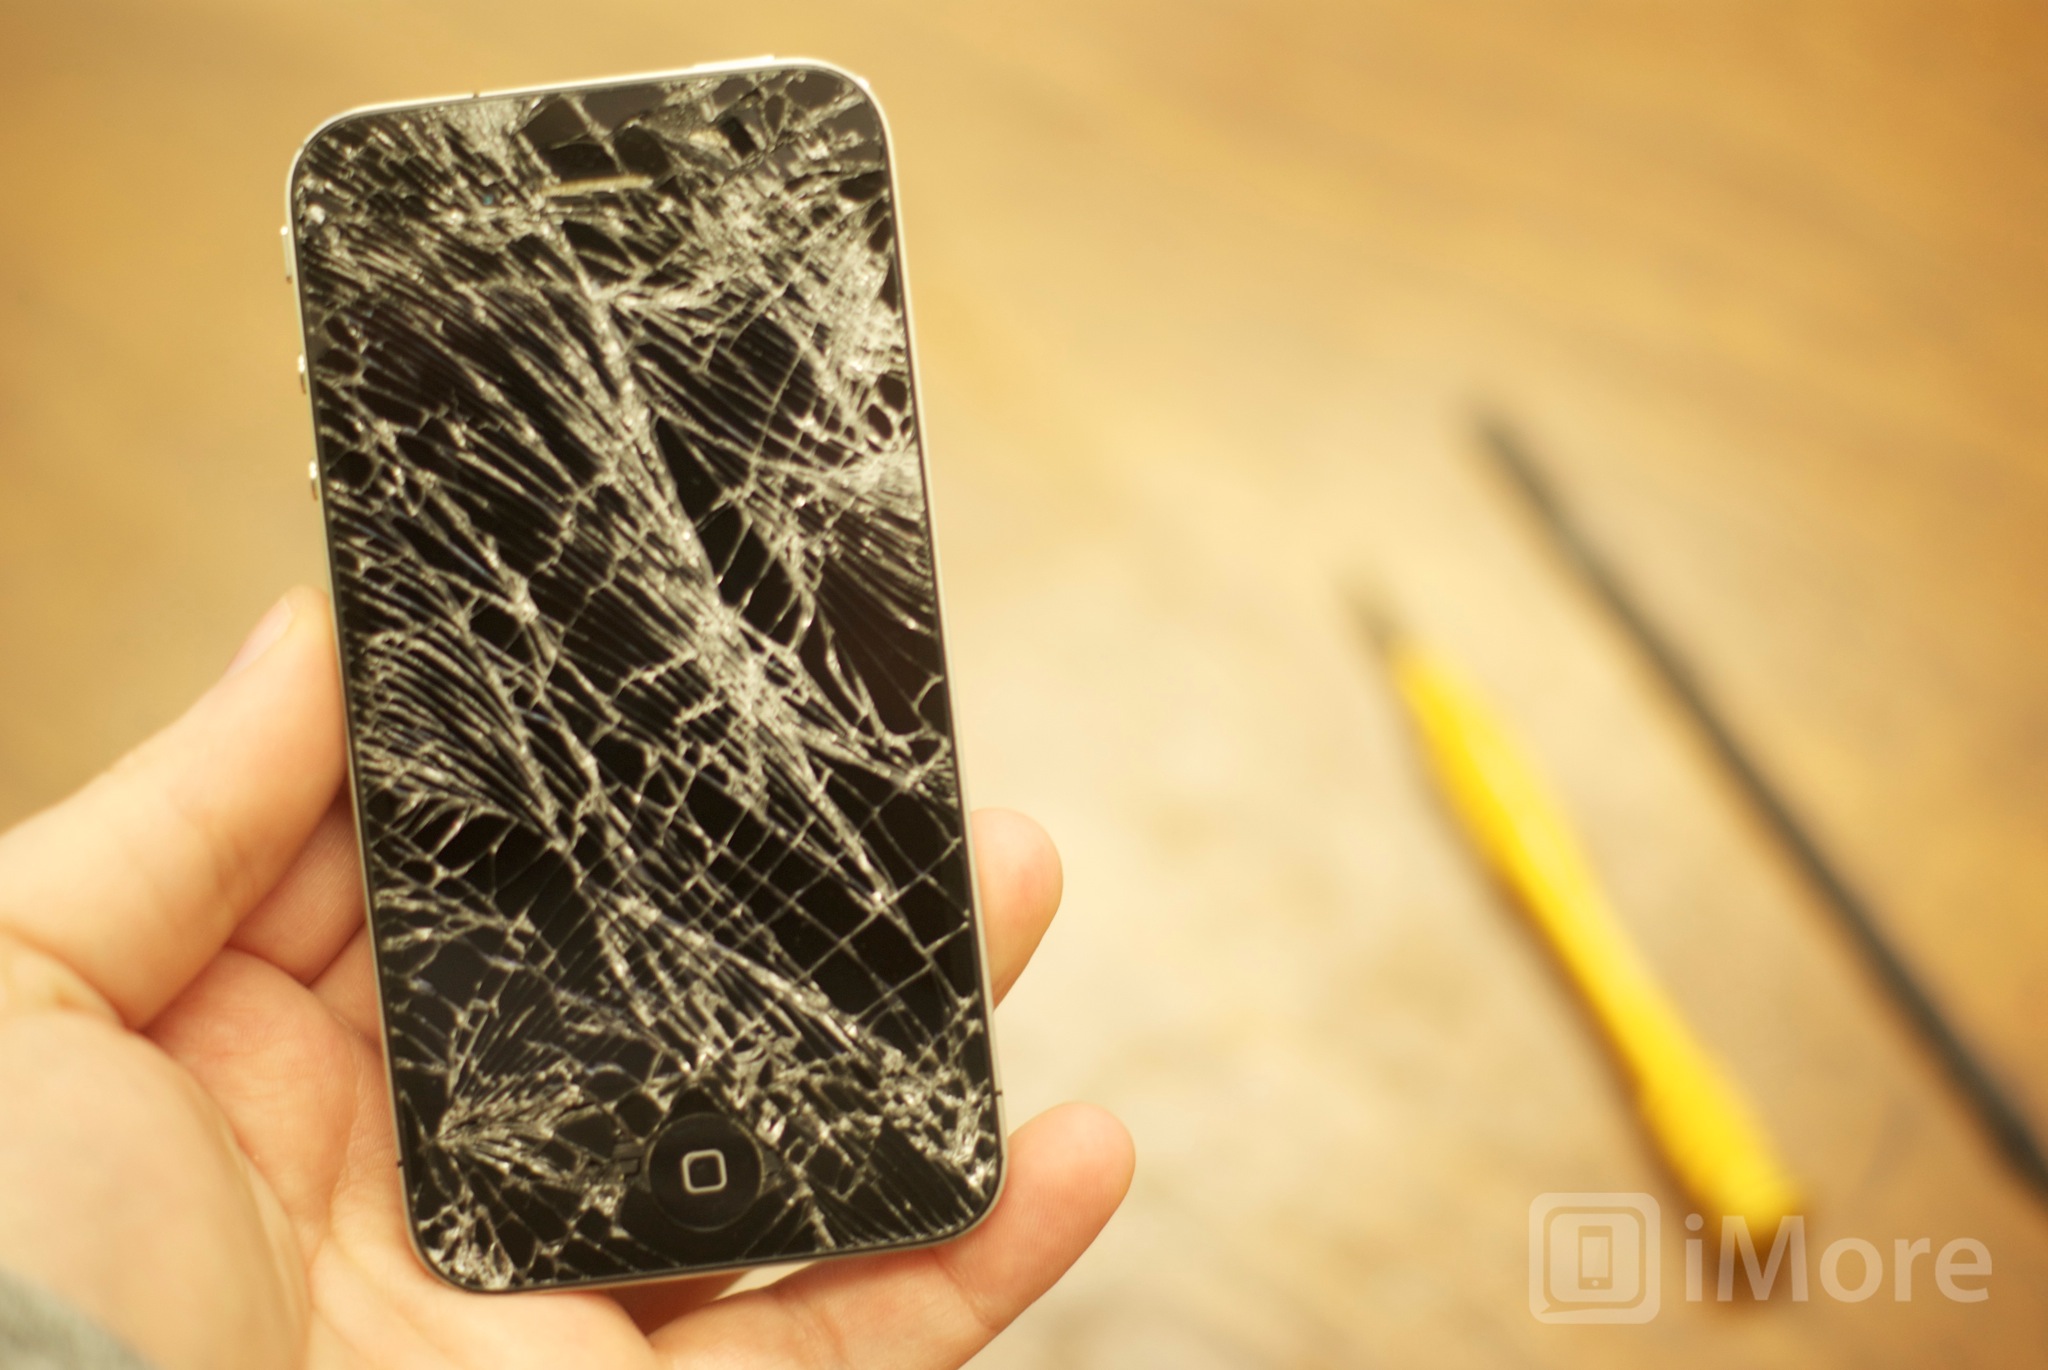 Weekly Mod Diy Repair A Broken Screen On An At T Gsm iPhone